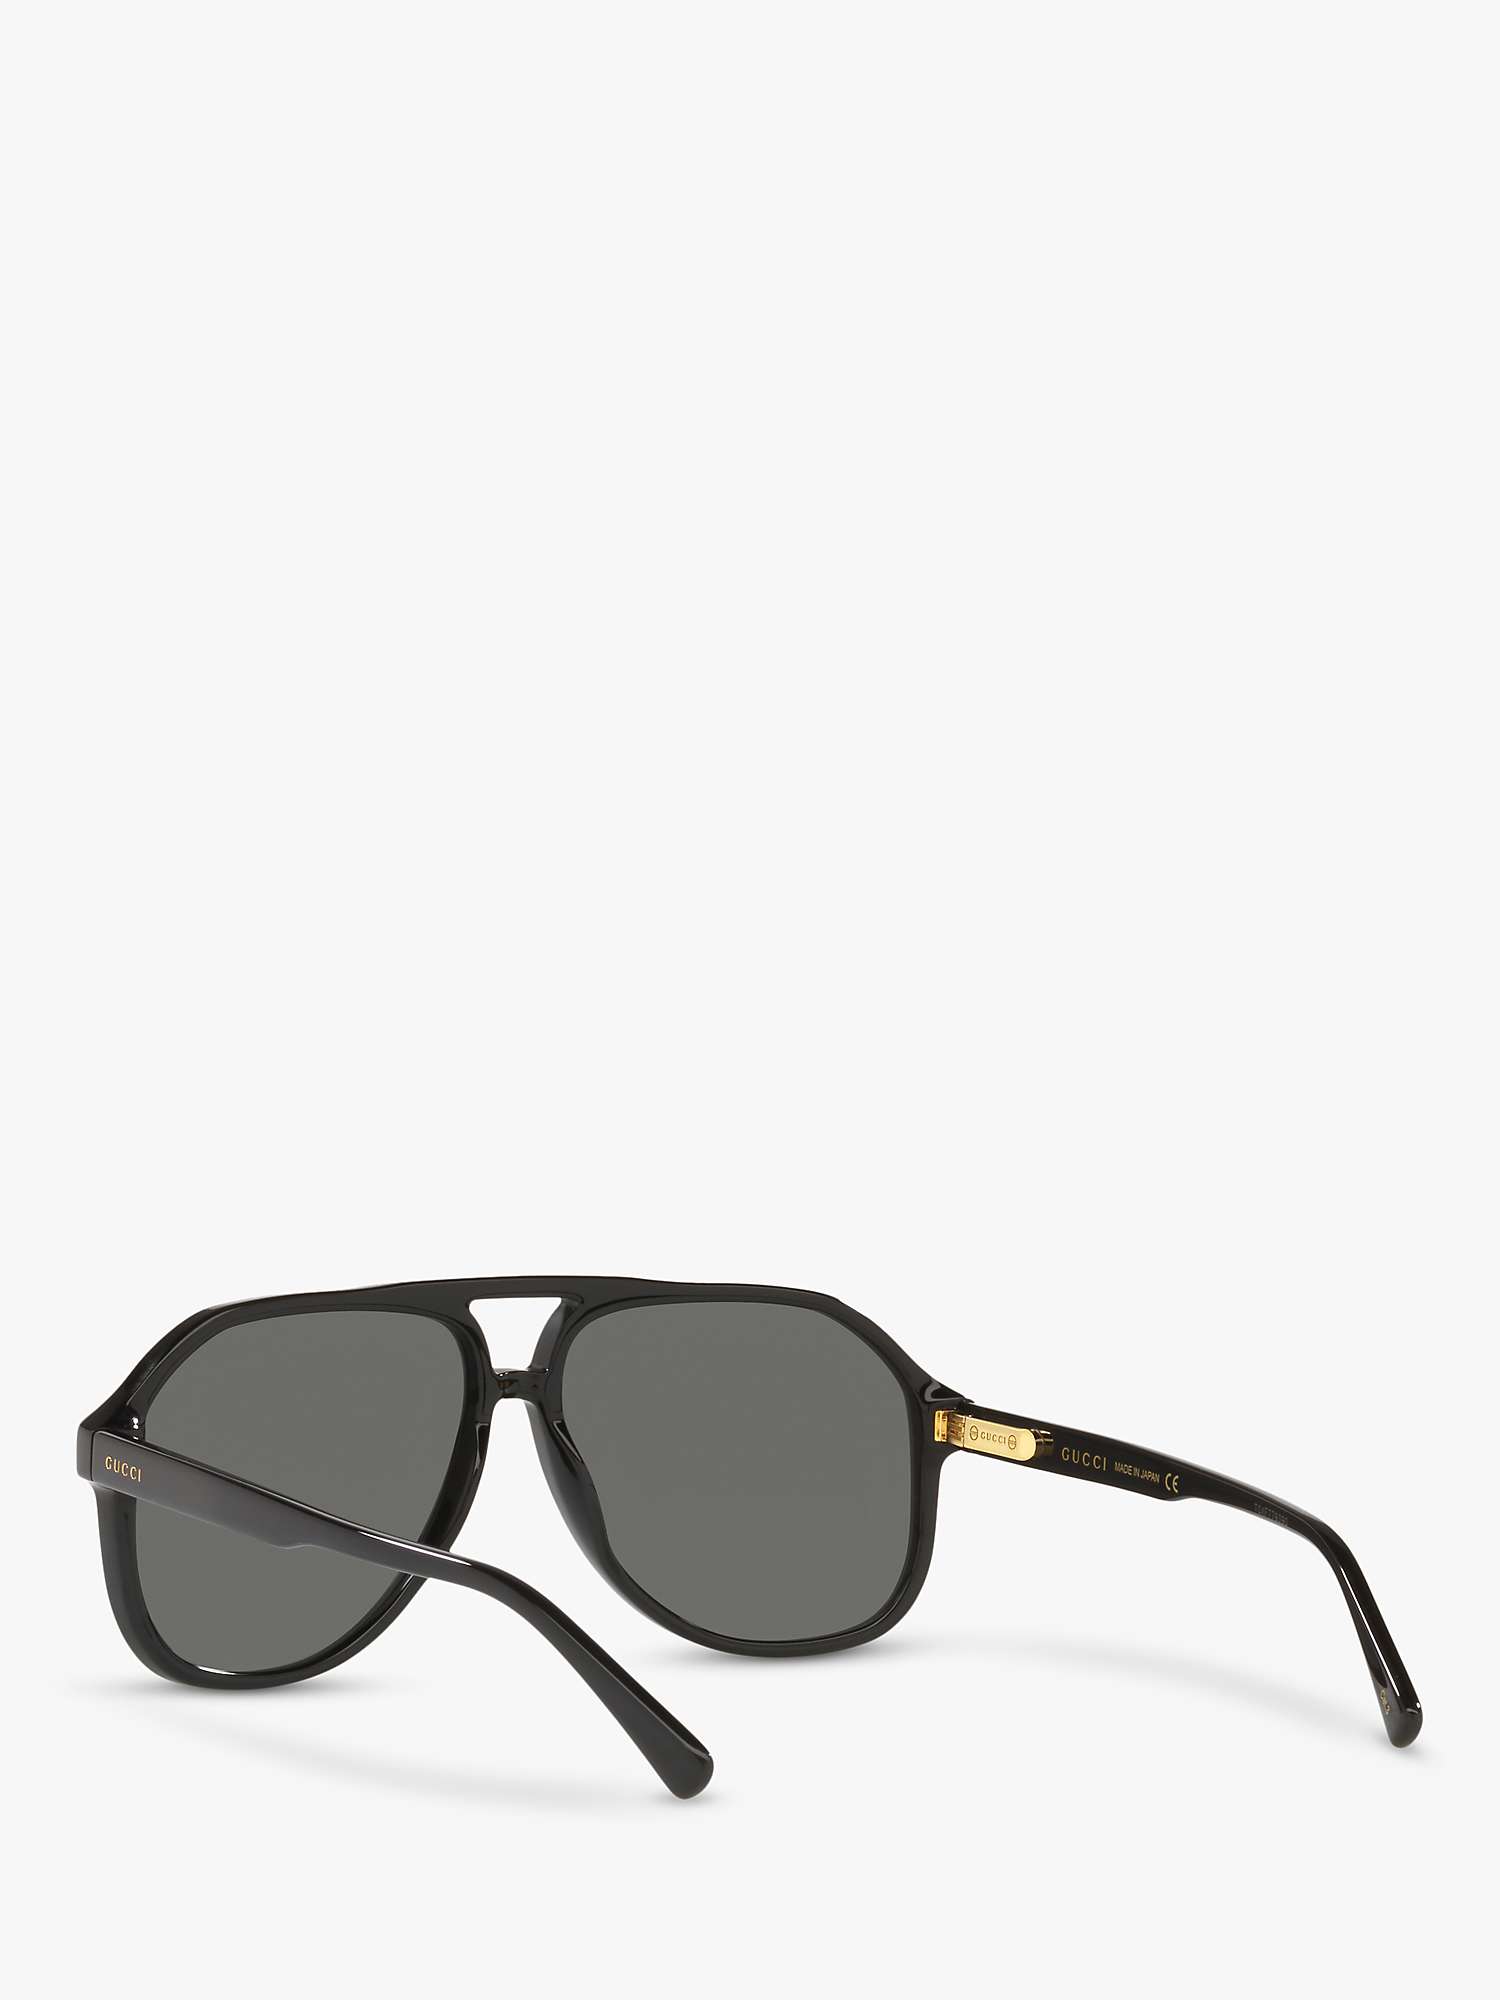 Buy Gucci GG1042S Men's Aviator Sunglasses, Black/Grey Online at johnlewis.com